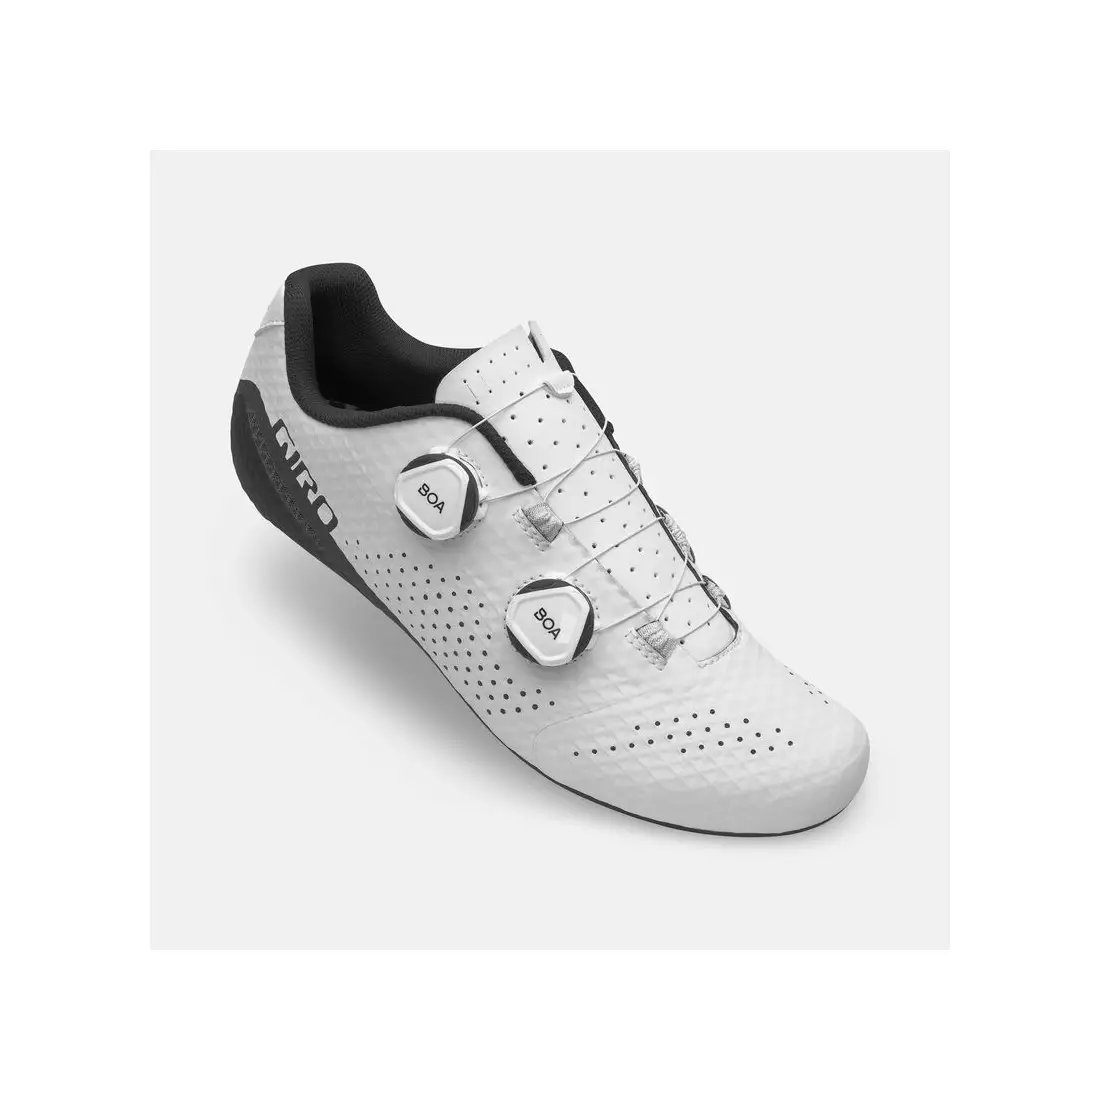 GIRO men's bicycle shoes REGIME white GR-7123136